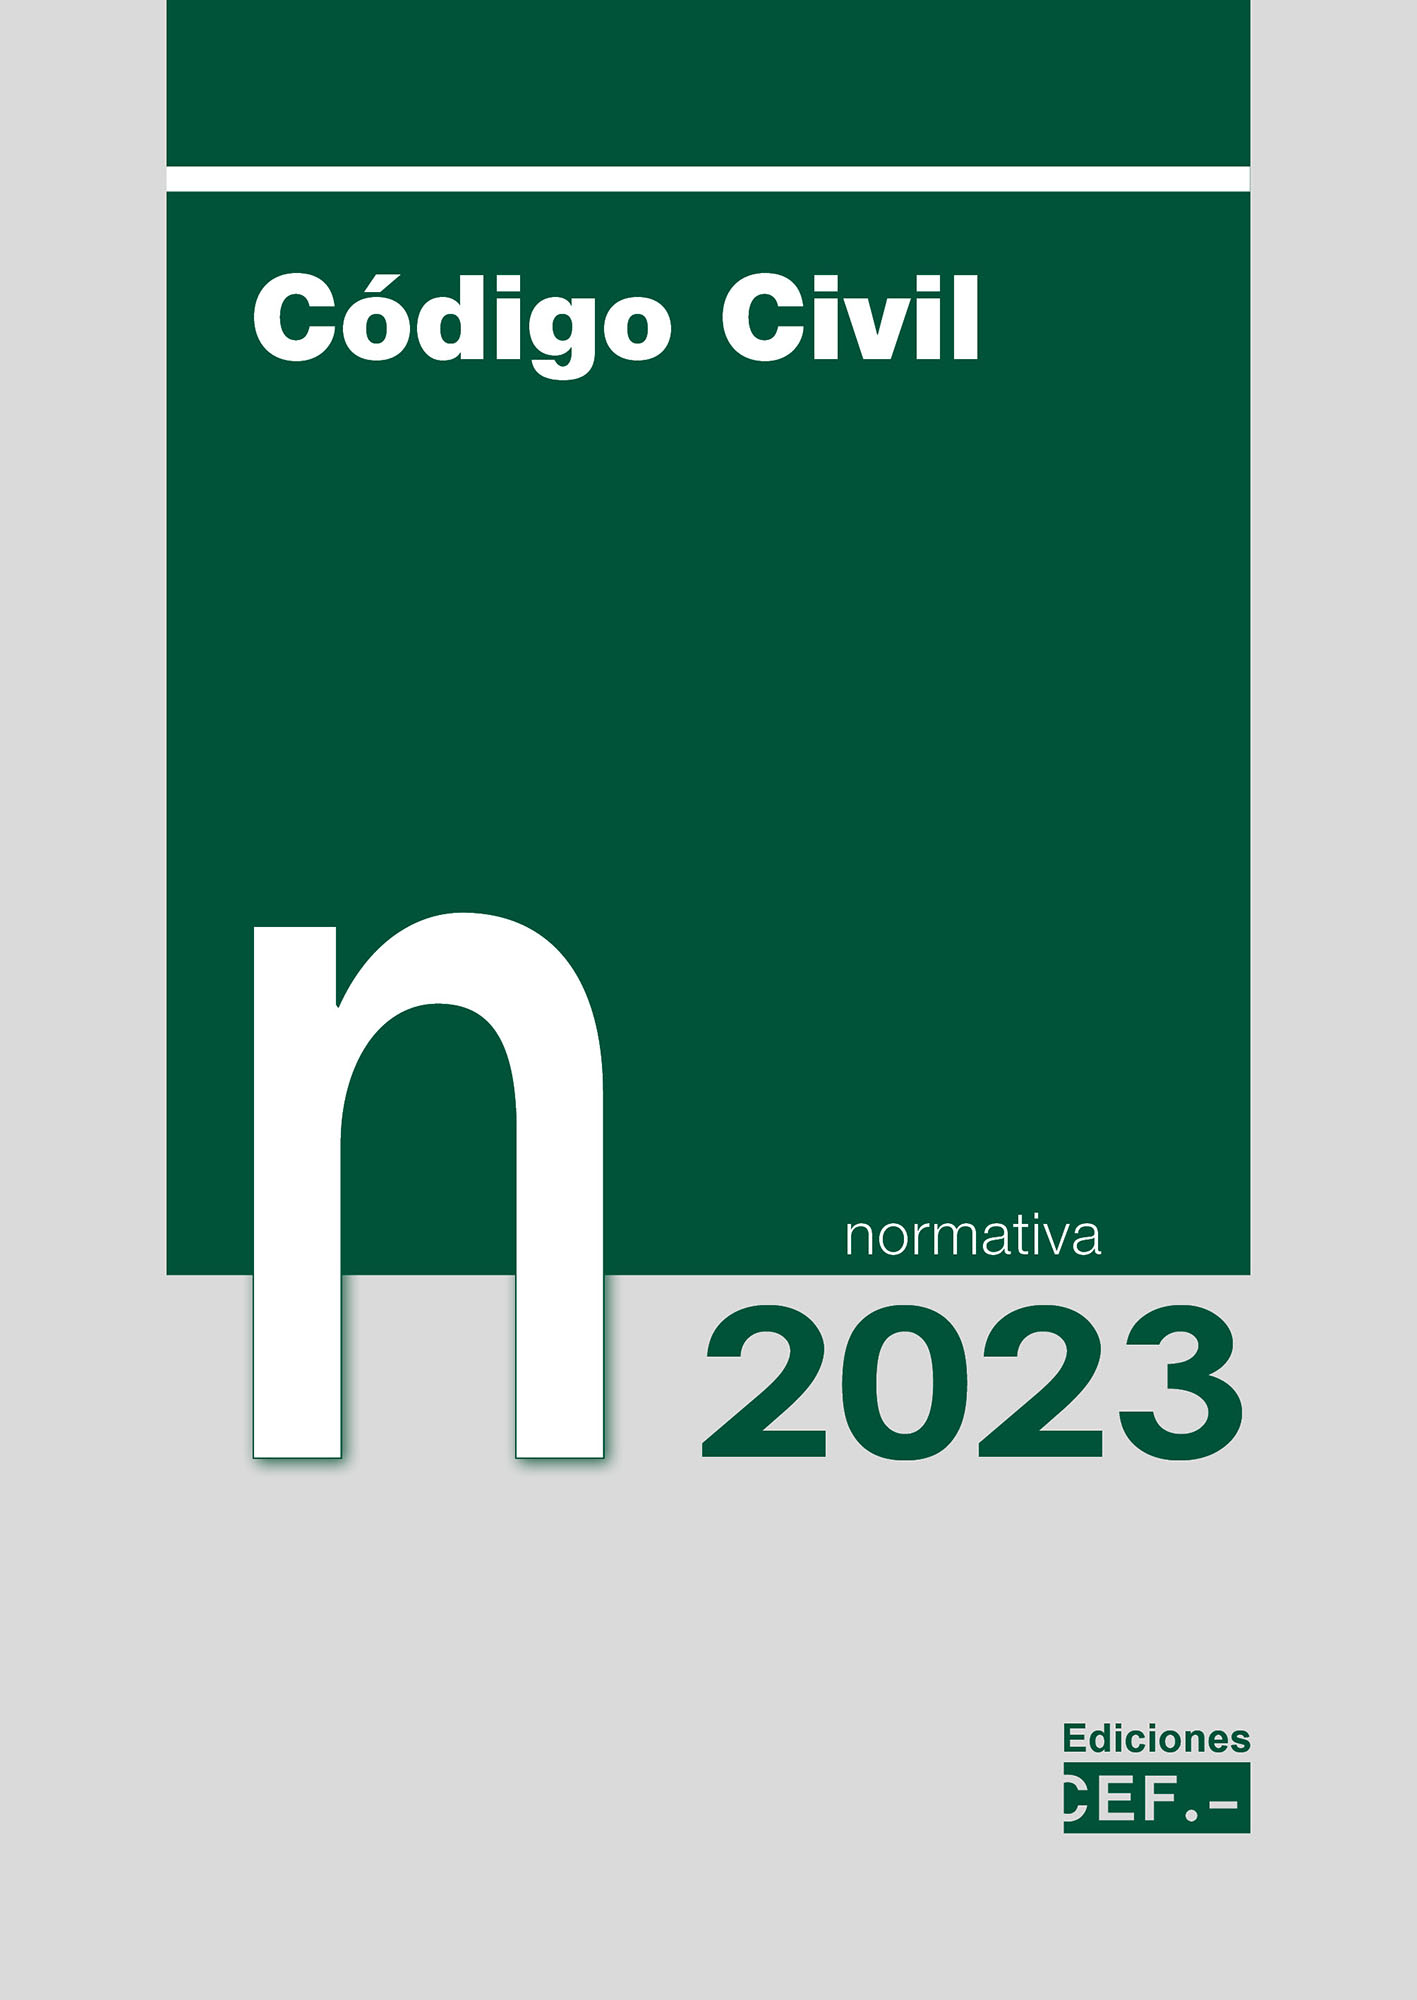 Cdigo Civil. Normativa 2023